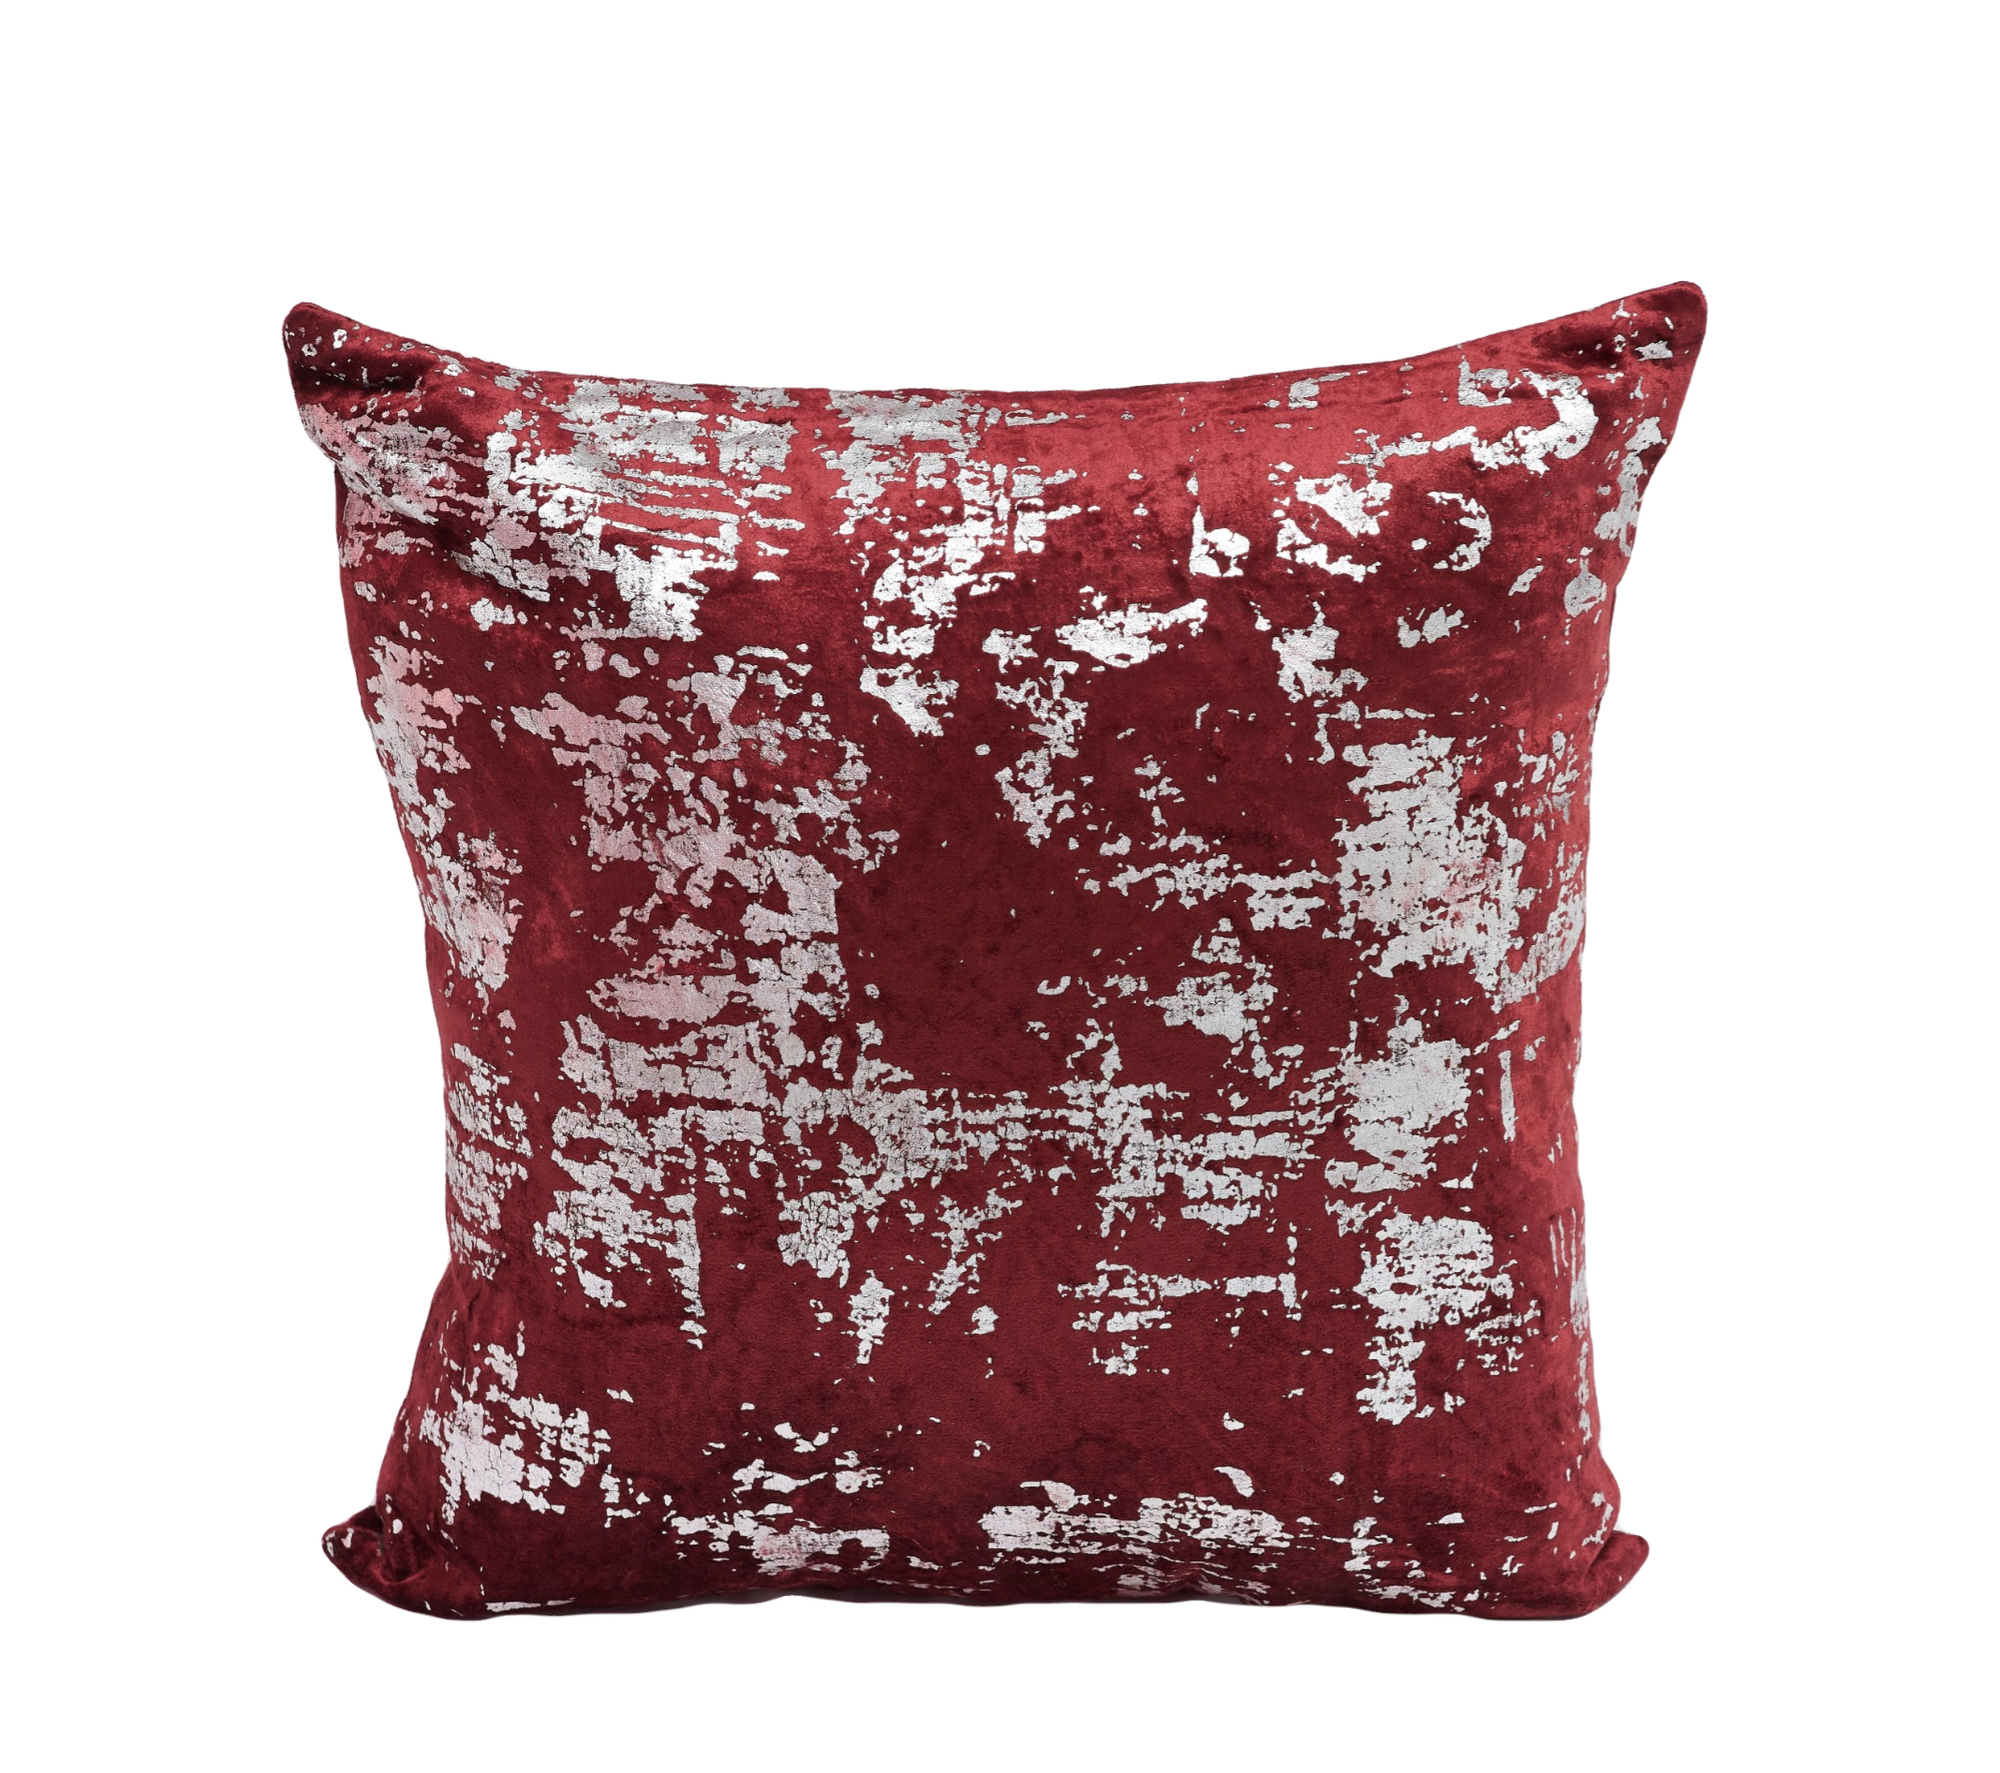 Electra | Patch Foil Design Throw Pillow